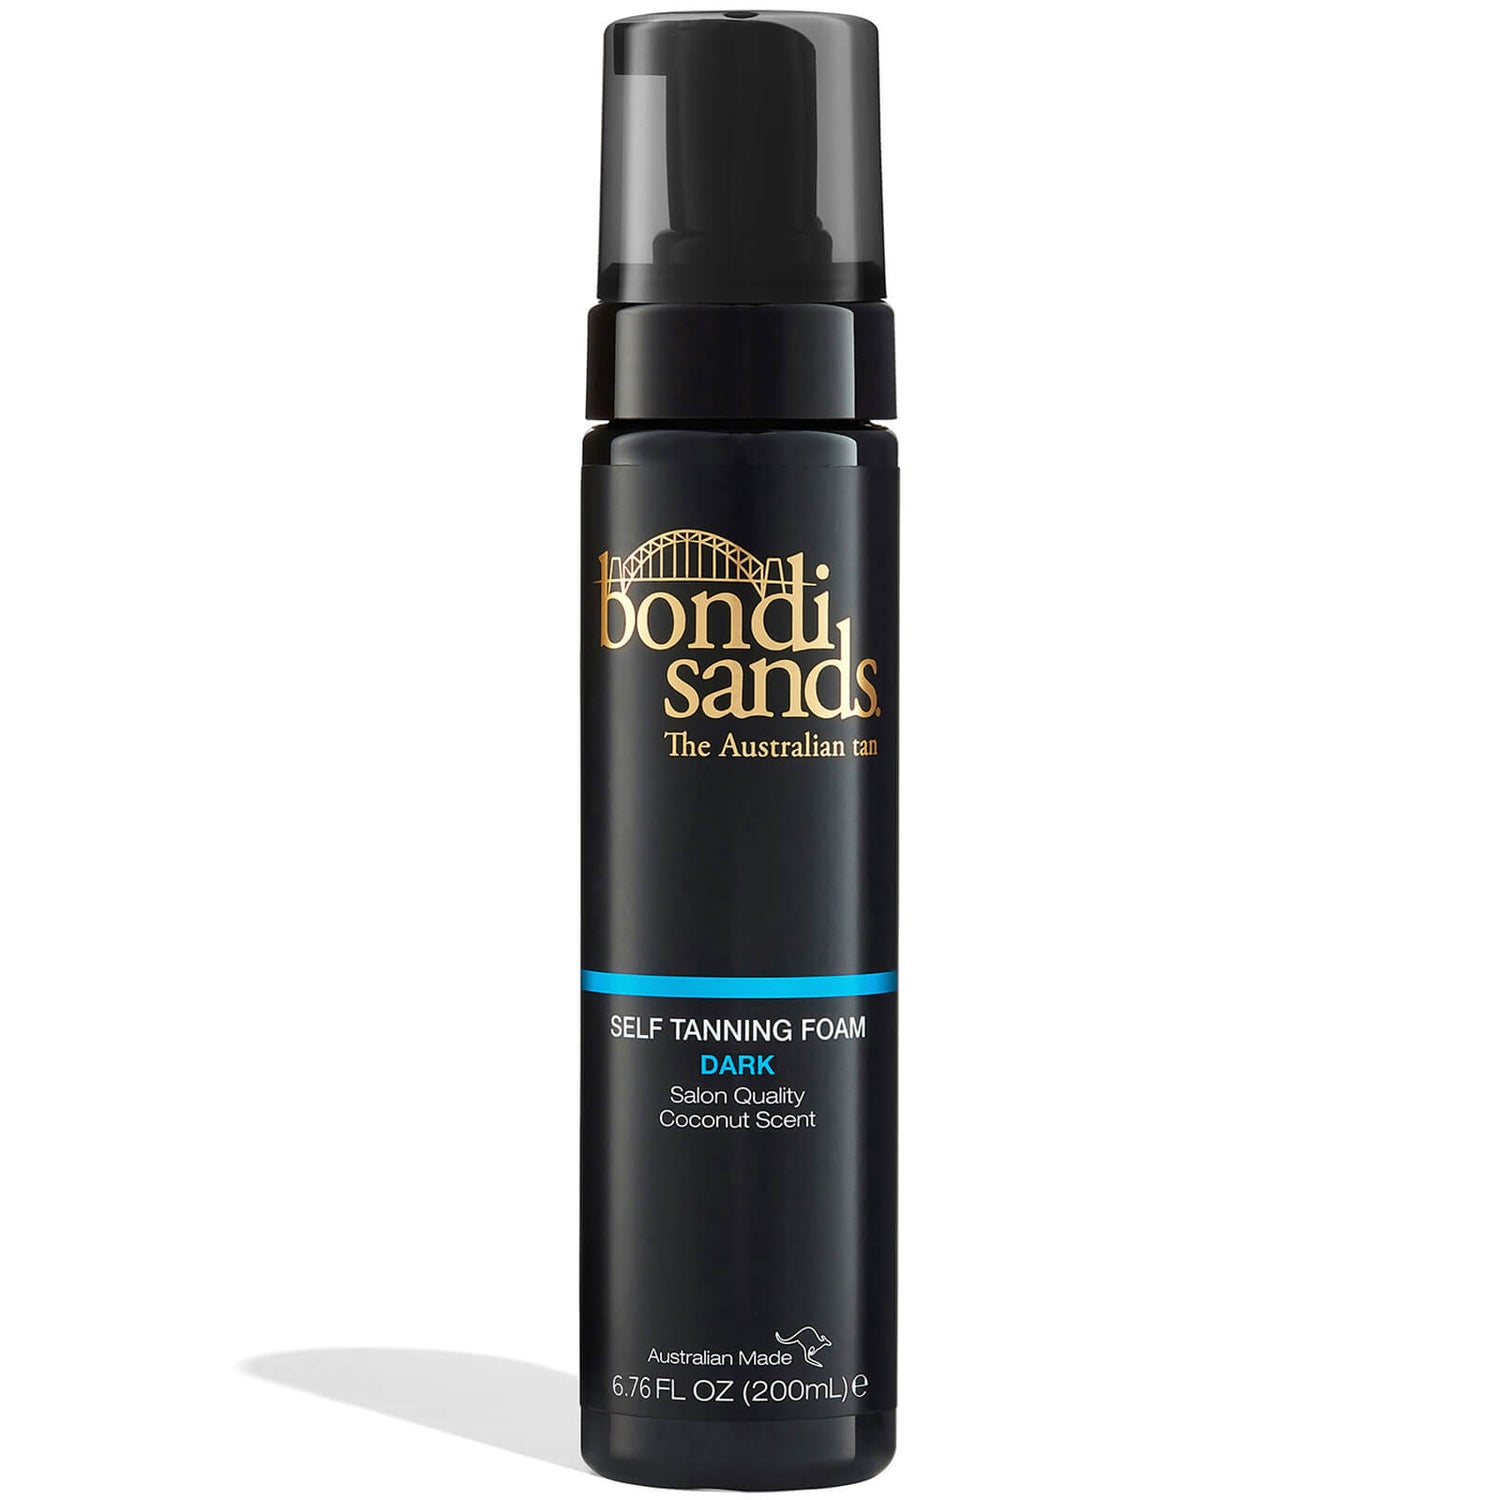 Bondi Sands Self Tanning Foam(본디 샌드 셀프 태닝 폼 200ml - 다크)